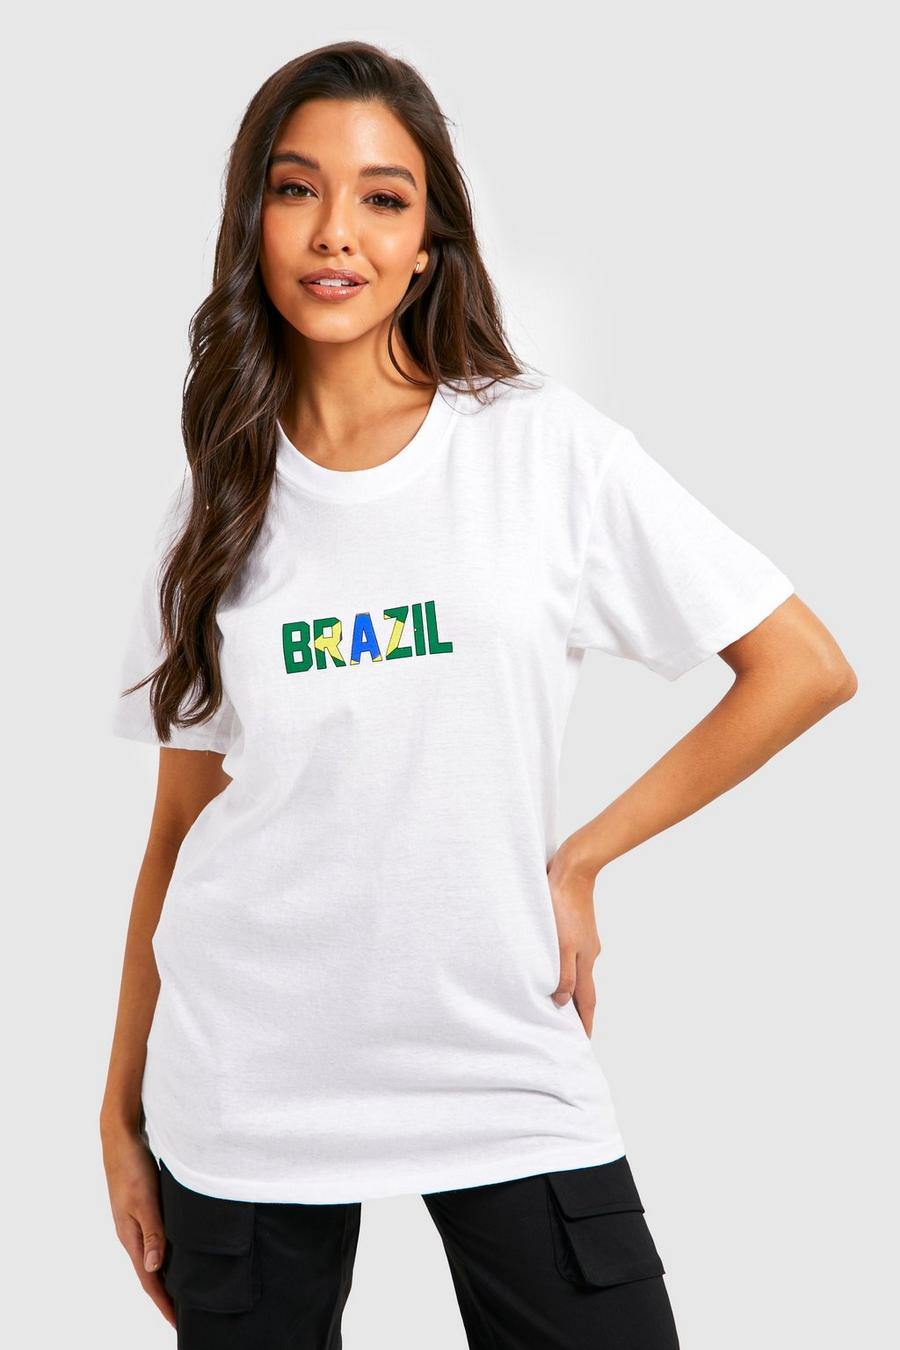 https://media.boohoo.com/i/boohoo/gzz38573_white_xl/female-white-brazil-oversized-t-shirt/?w=900&qlt=default&fmt.jp2.qlt=70&fmt=auto&sm=fit